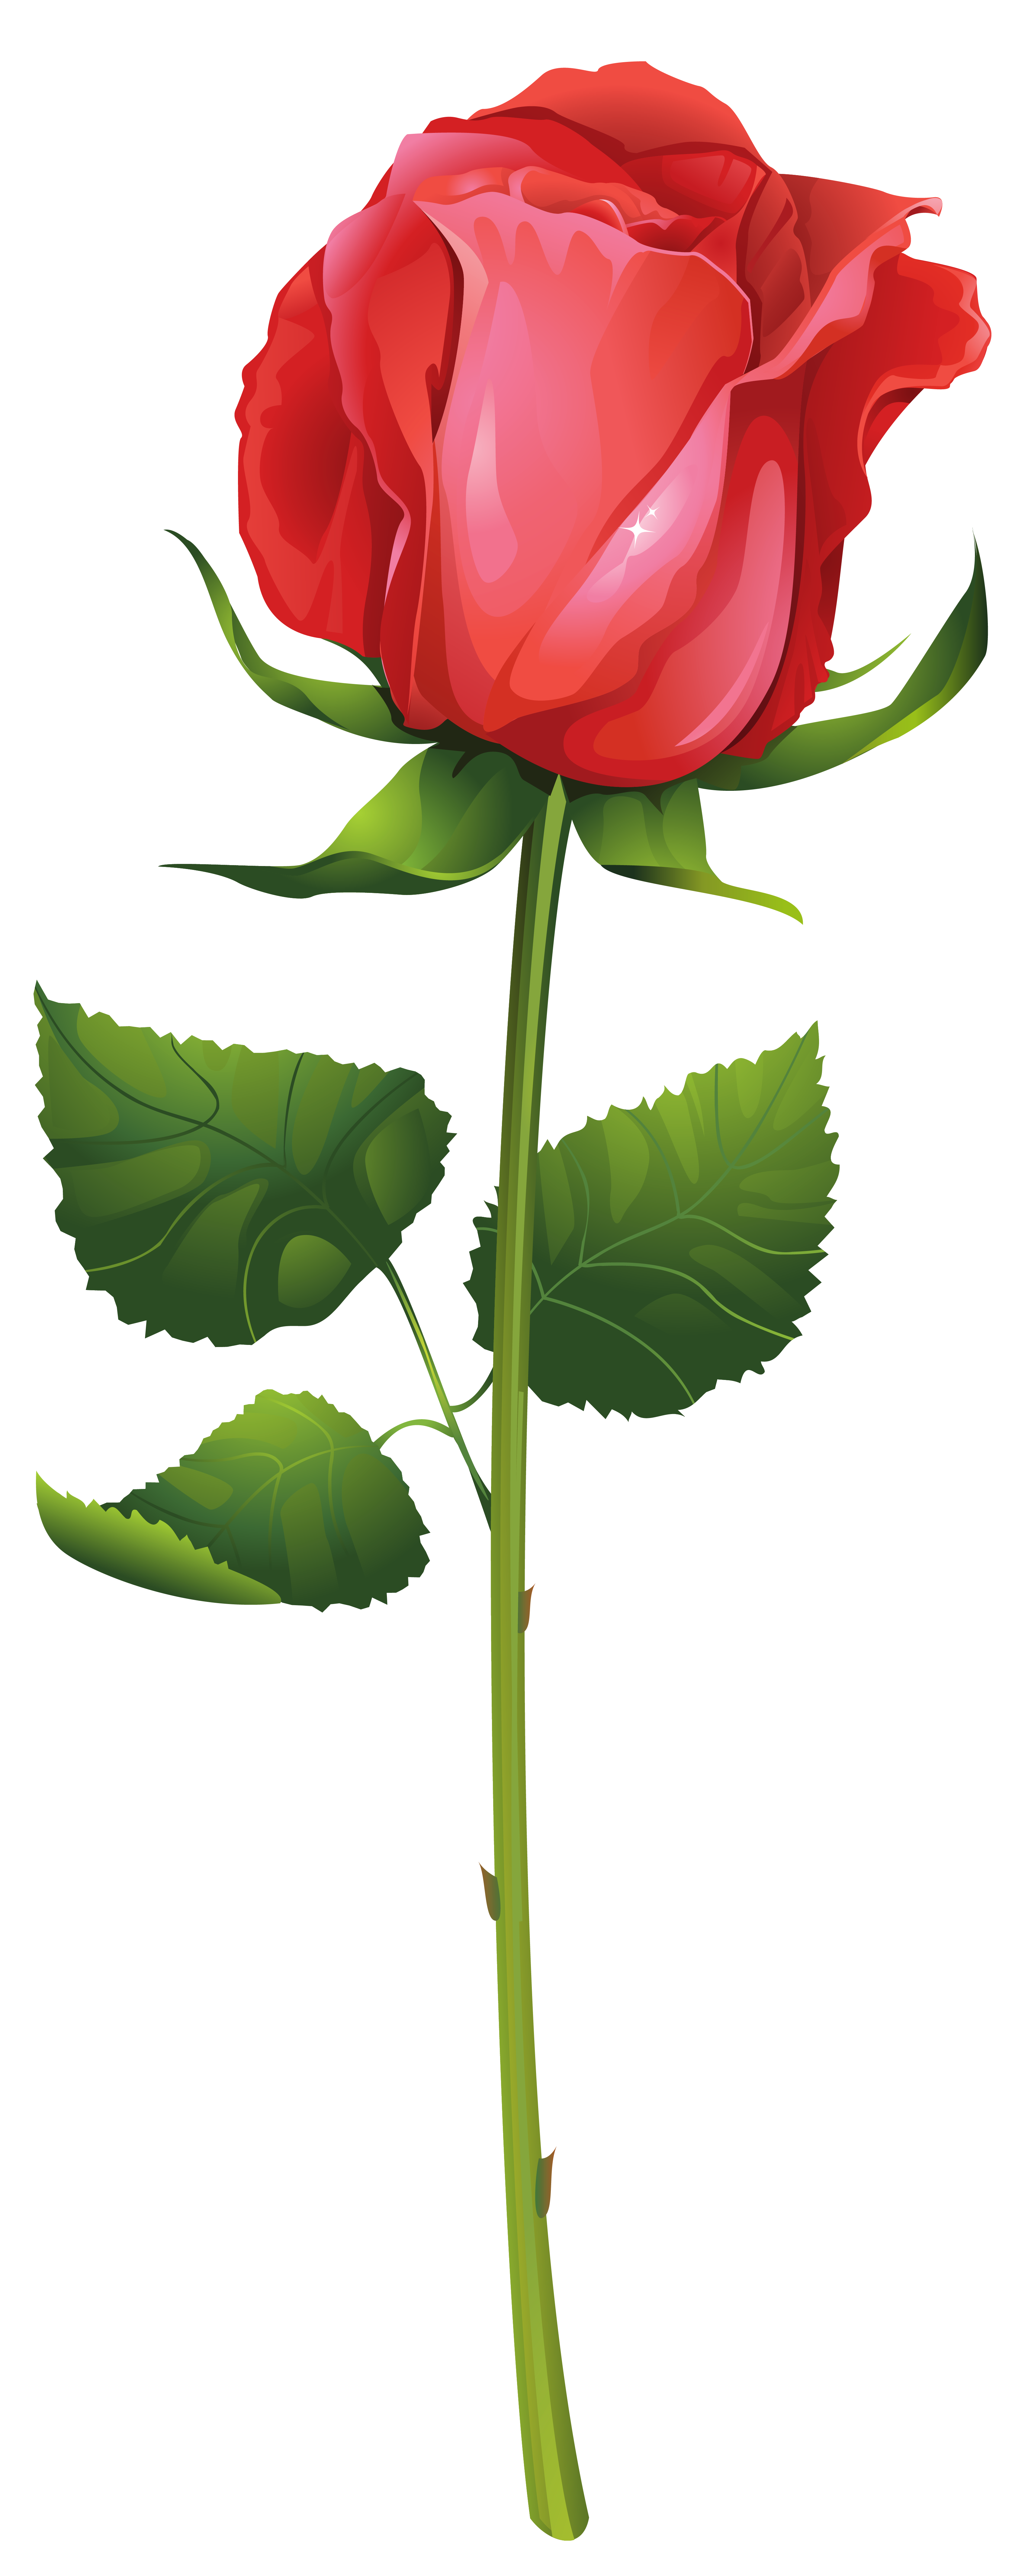 Rose with Stem PNG Clip Art Image